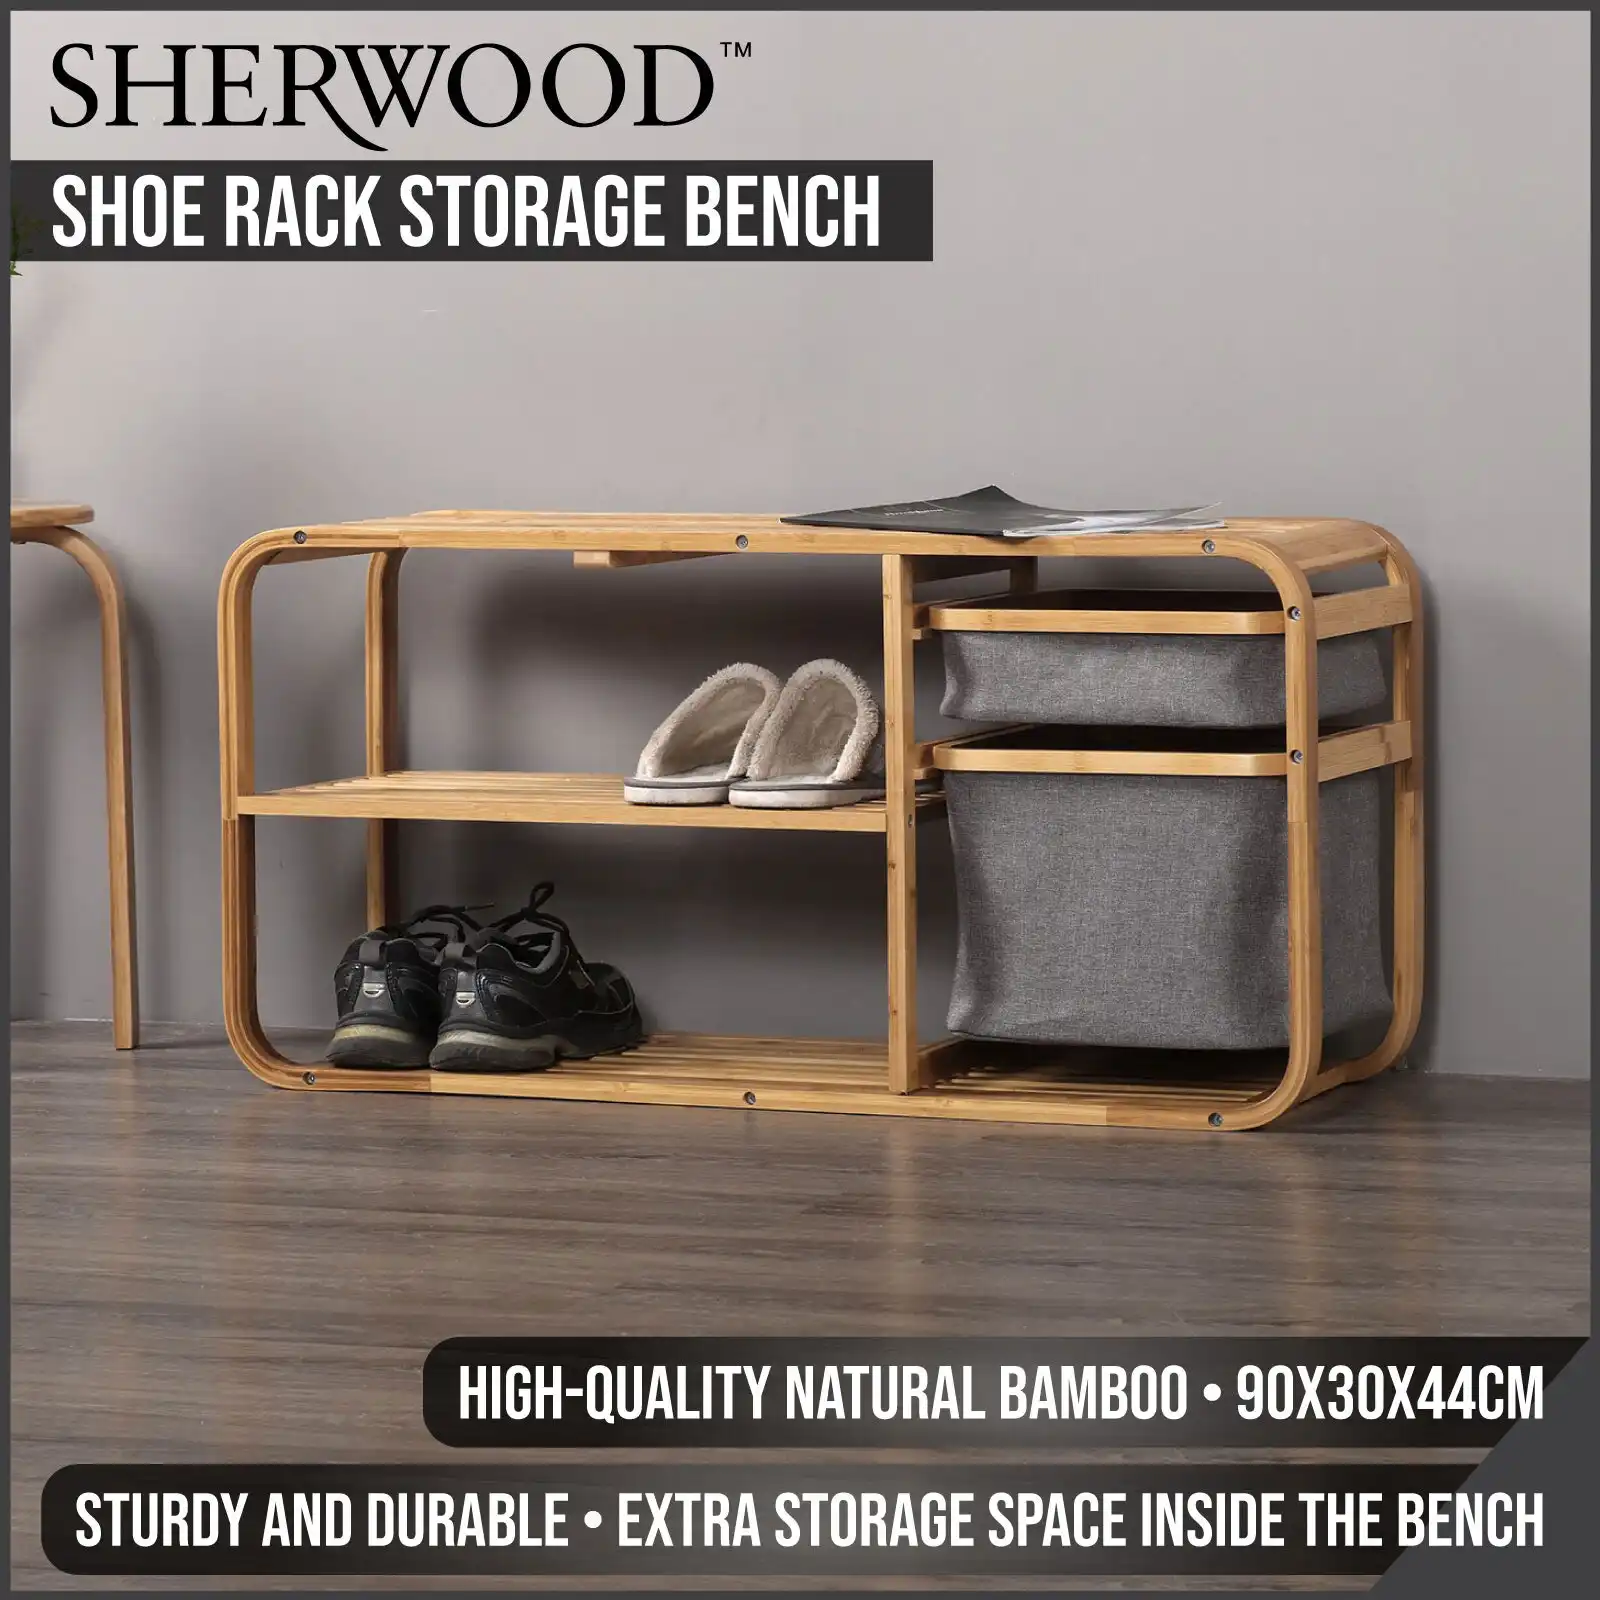 Sherwood Home Bamboo Shoe Rack Storage Bench - Natural Bamboo - 90x30x44cm